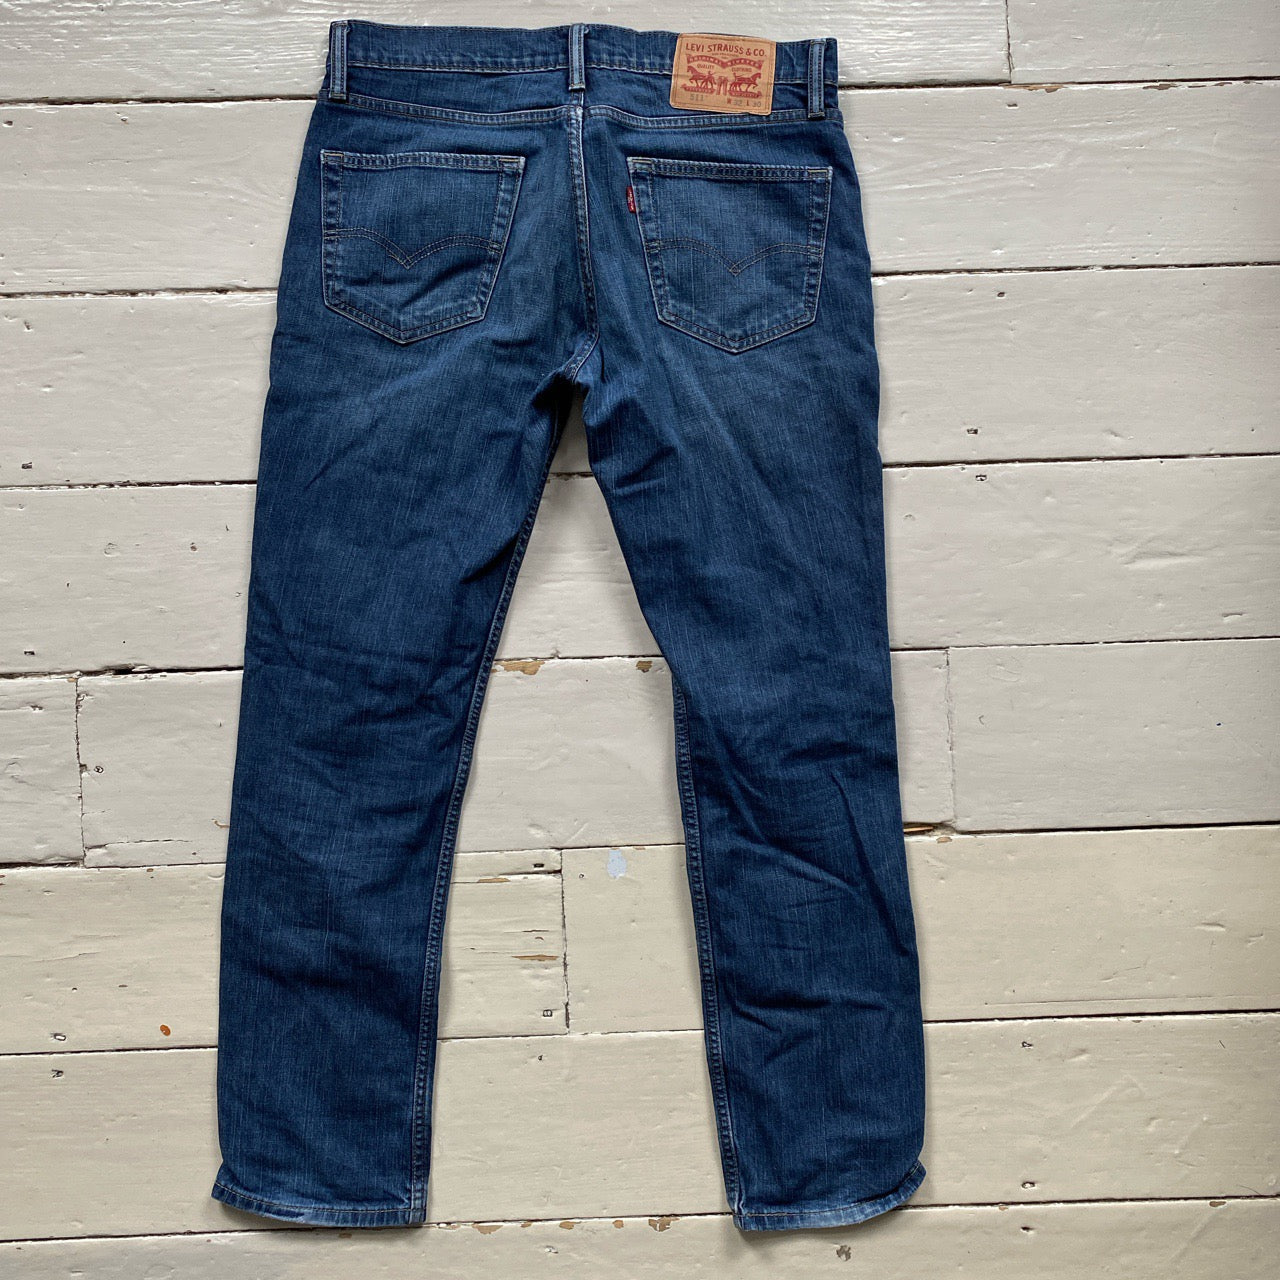 Levis 511 Slim Navy Jeans (32/30)